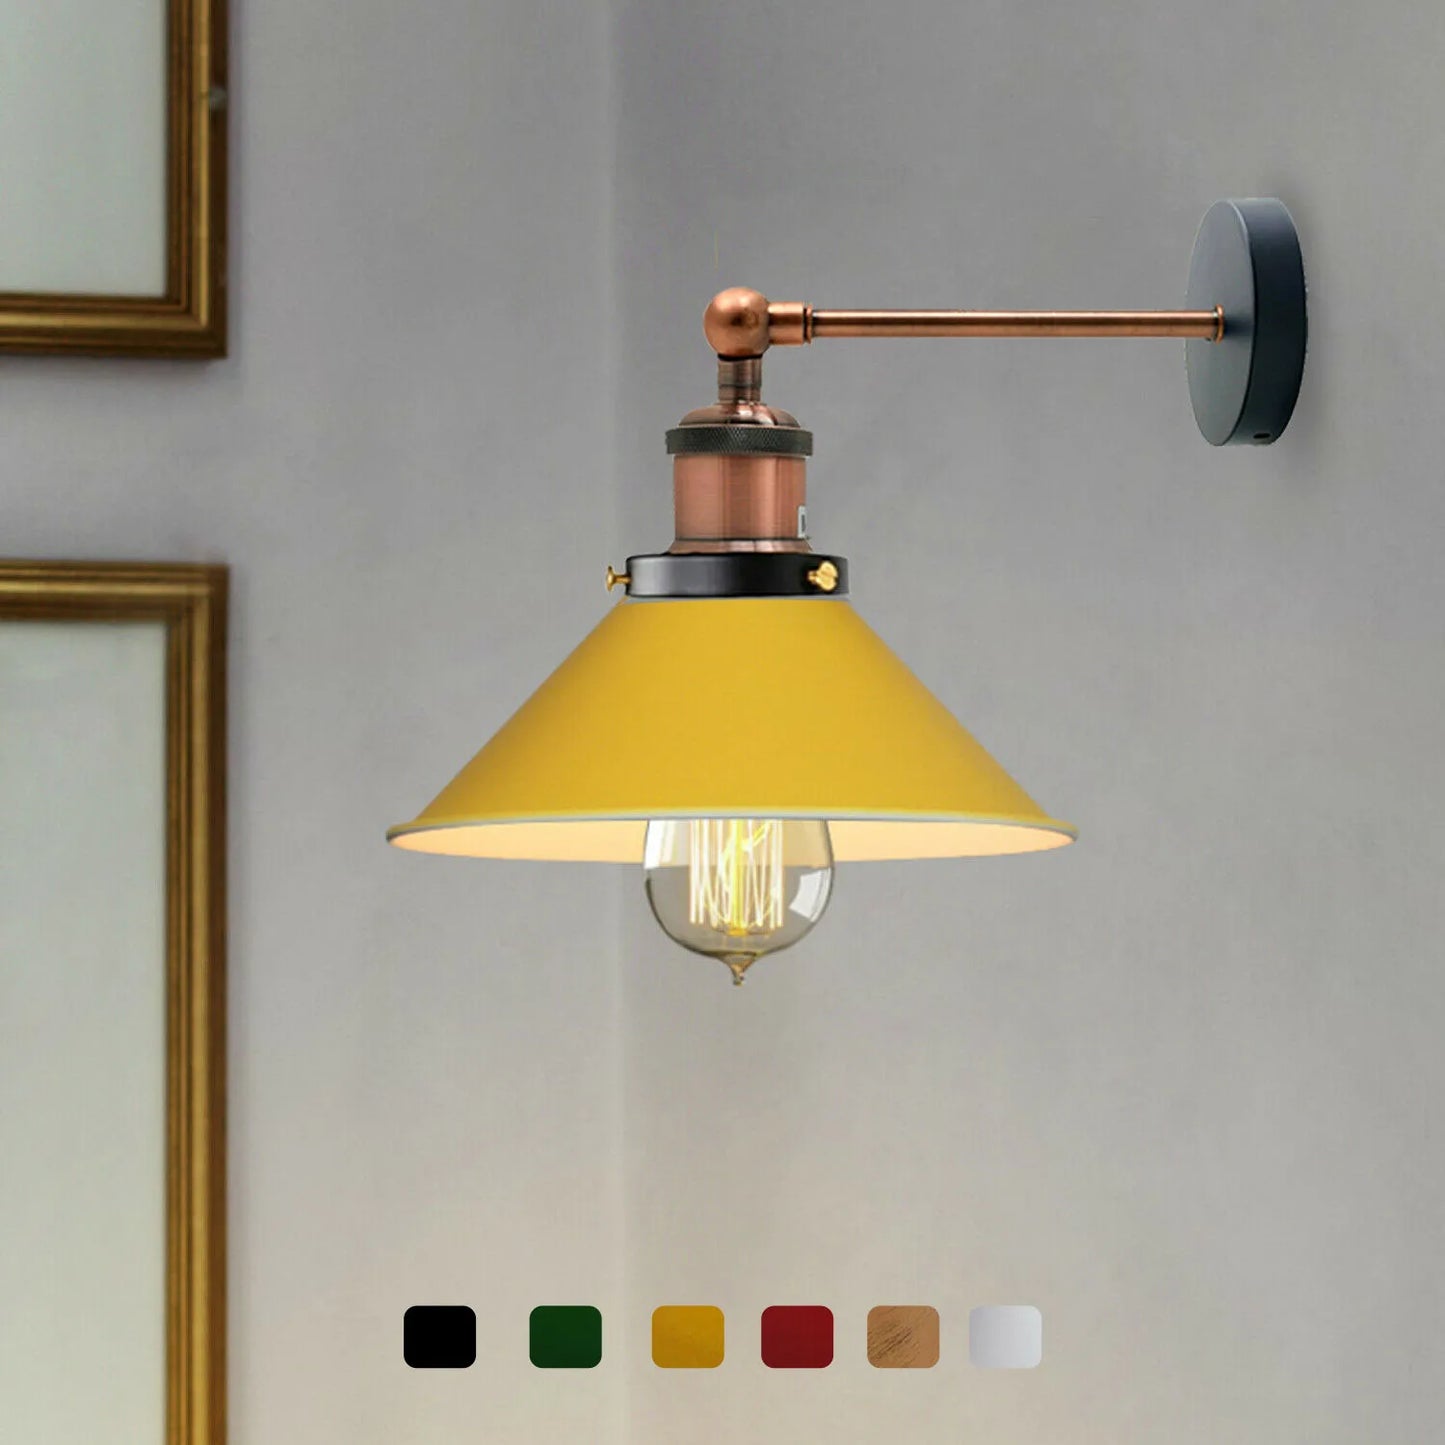 Industrial cone light shades wall light living room-e27 holder-Application image